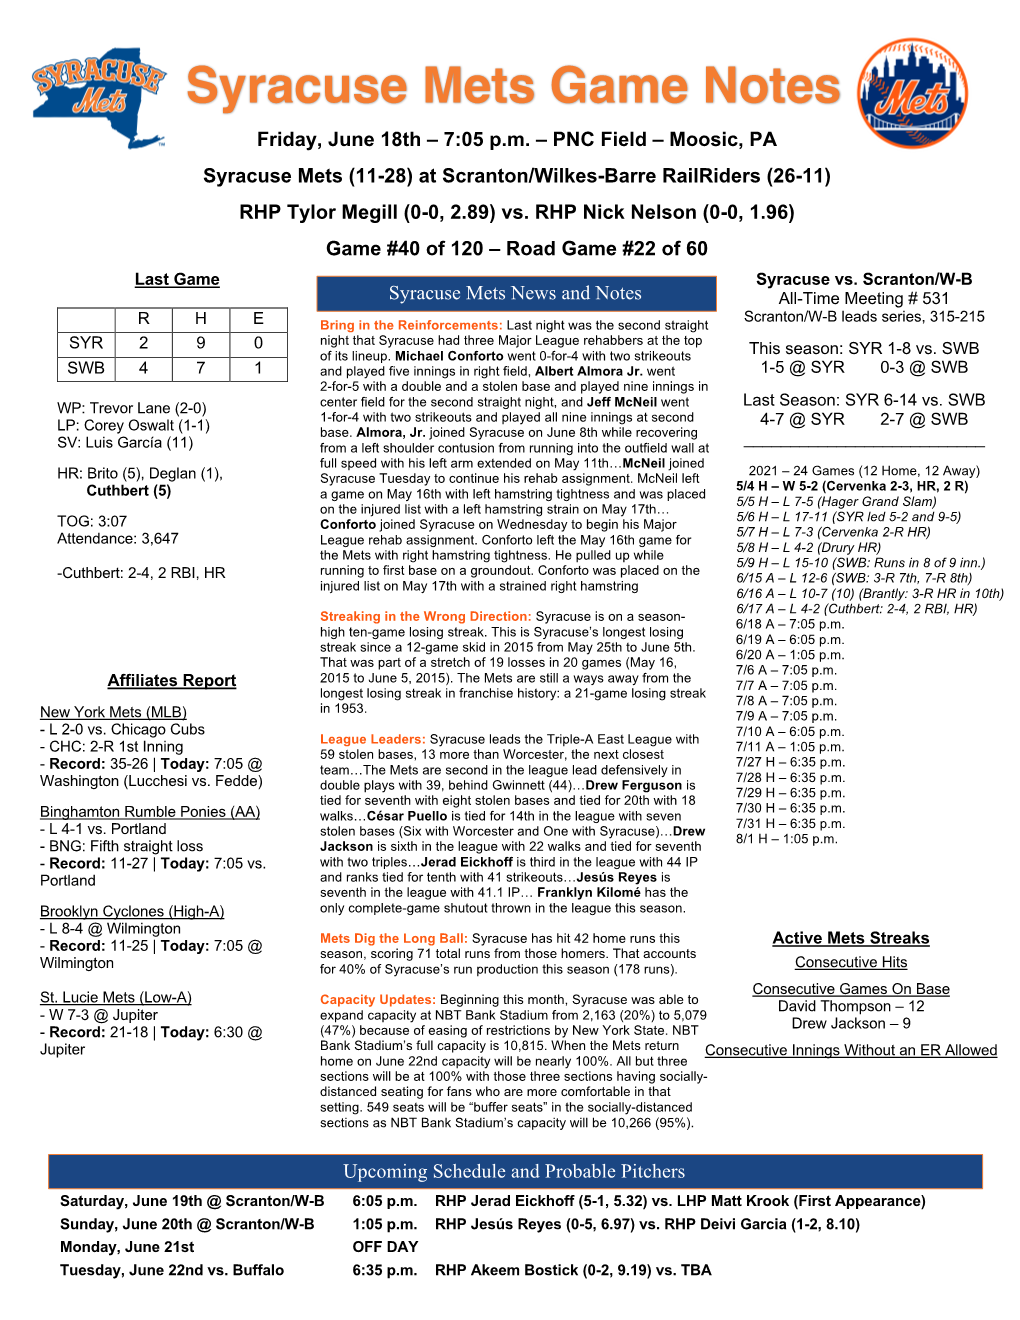 June 18Th Syracuse Mets Game Notes at Scranton:Wilkes-Barre